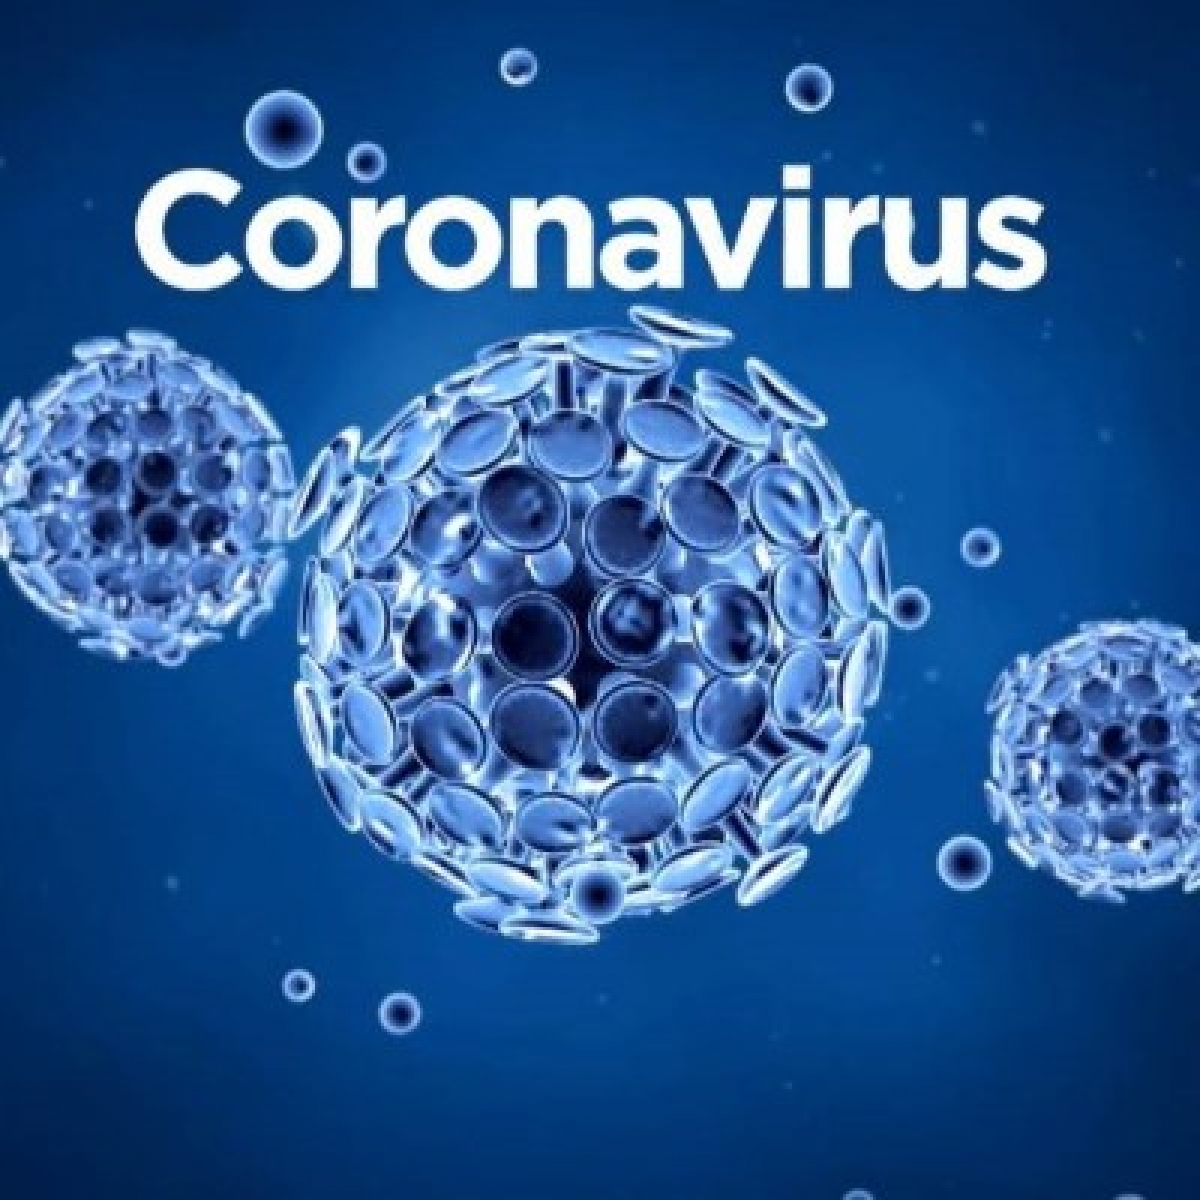 Our Response To Coronavirus